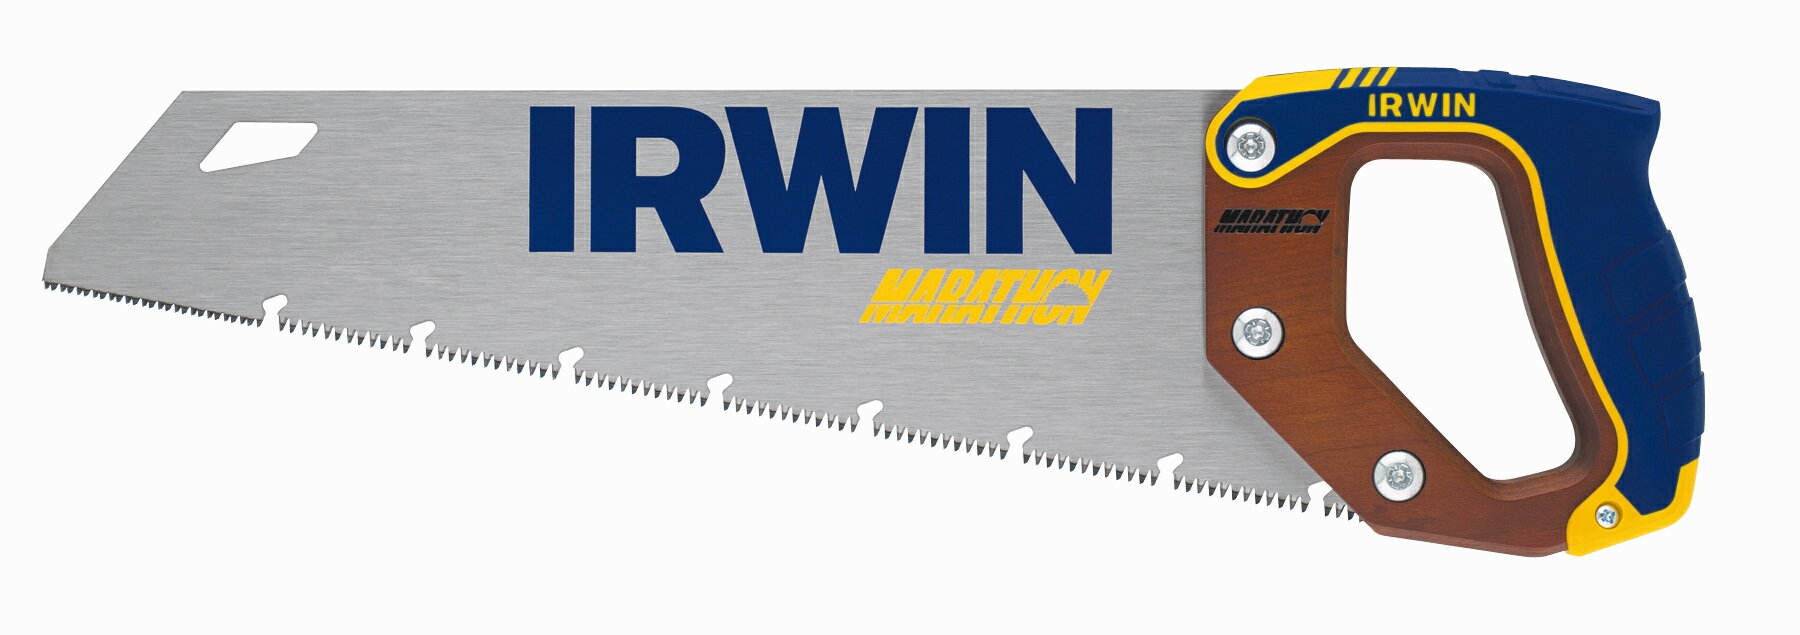 Irwin Marathon Carpenter Saw - Irwin Tools, Transparent background PNG HD thumbnail